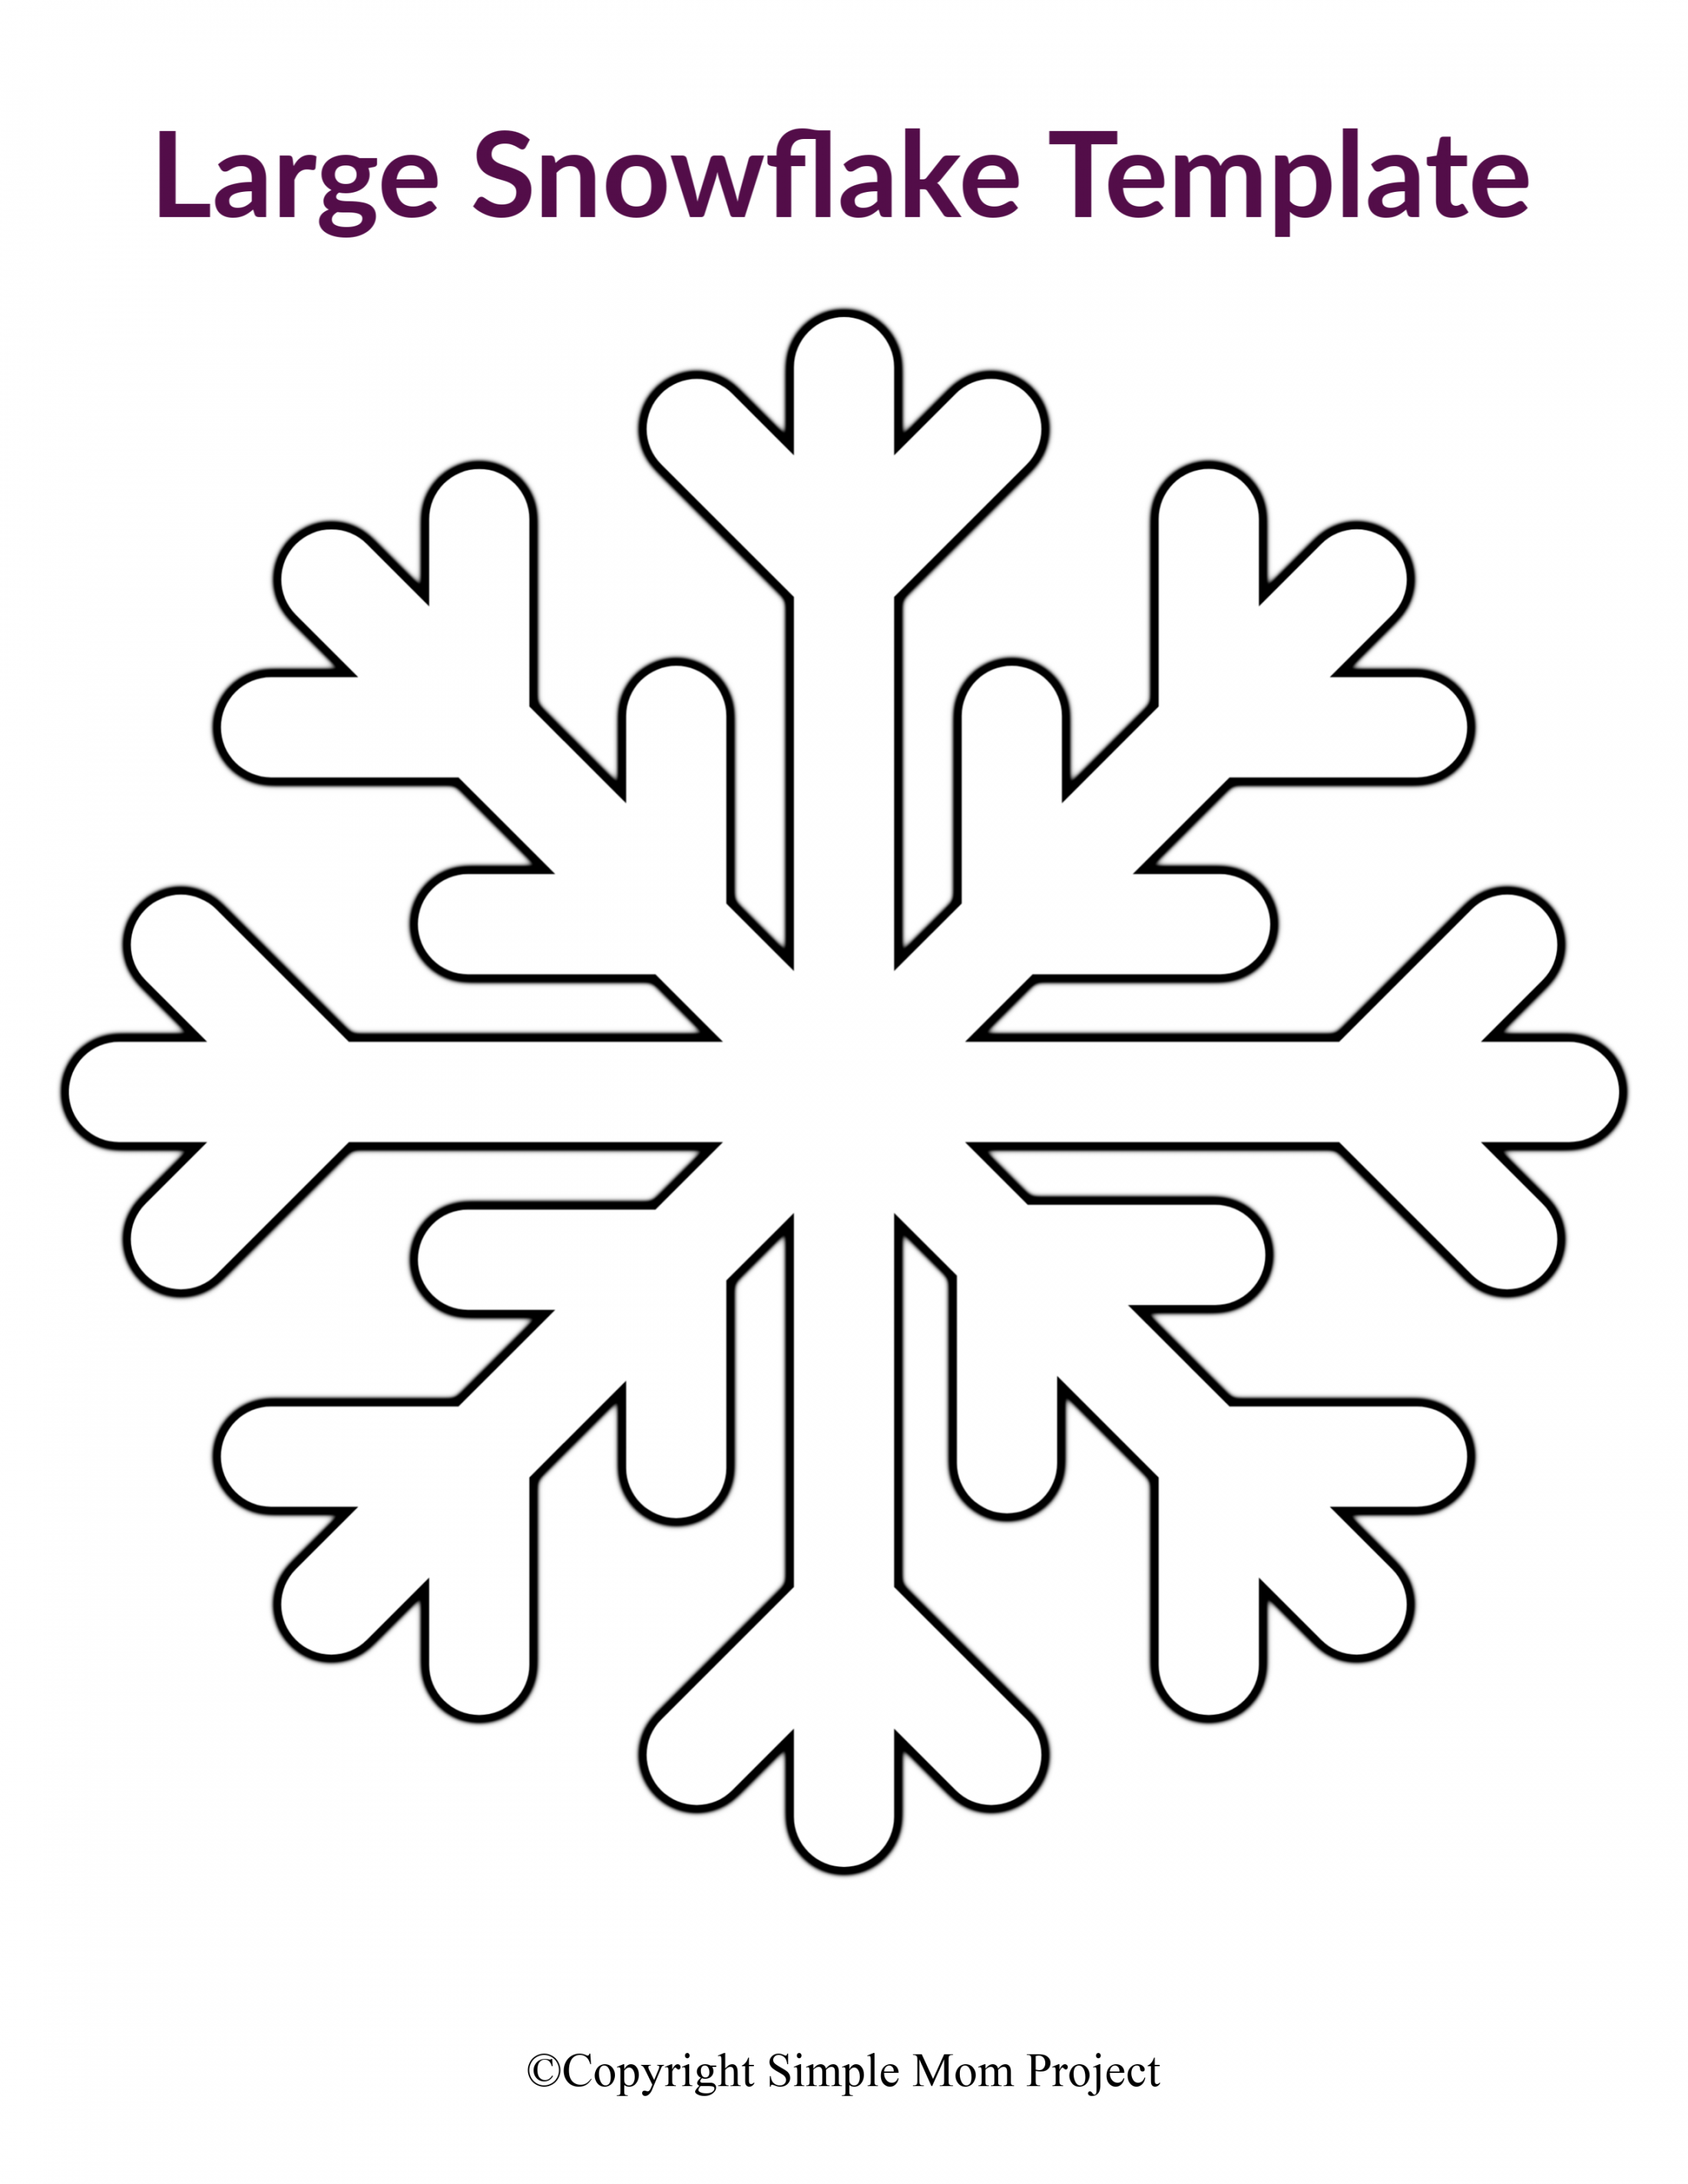 Free Printable Large Snowflake Templates - Simple Mom Project - FREE Printables - Snowflake Stencils Printable